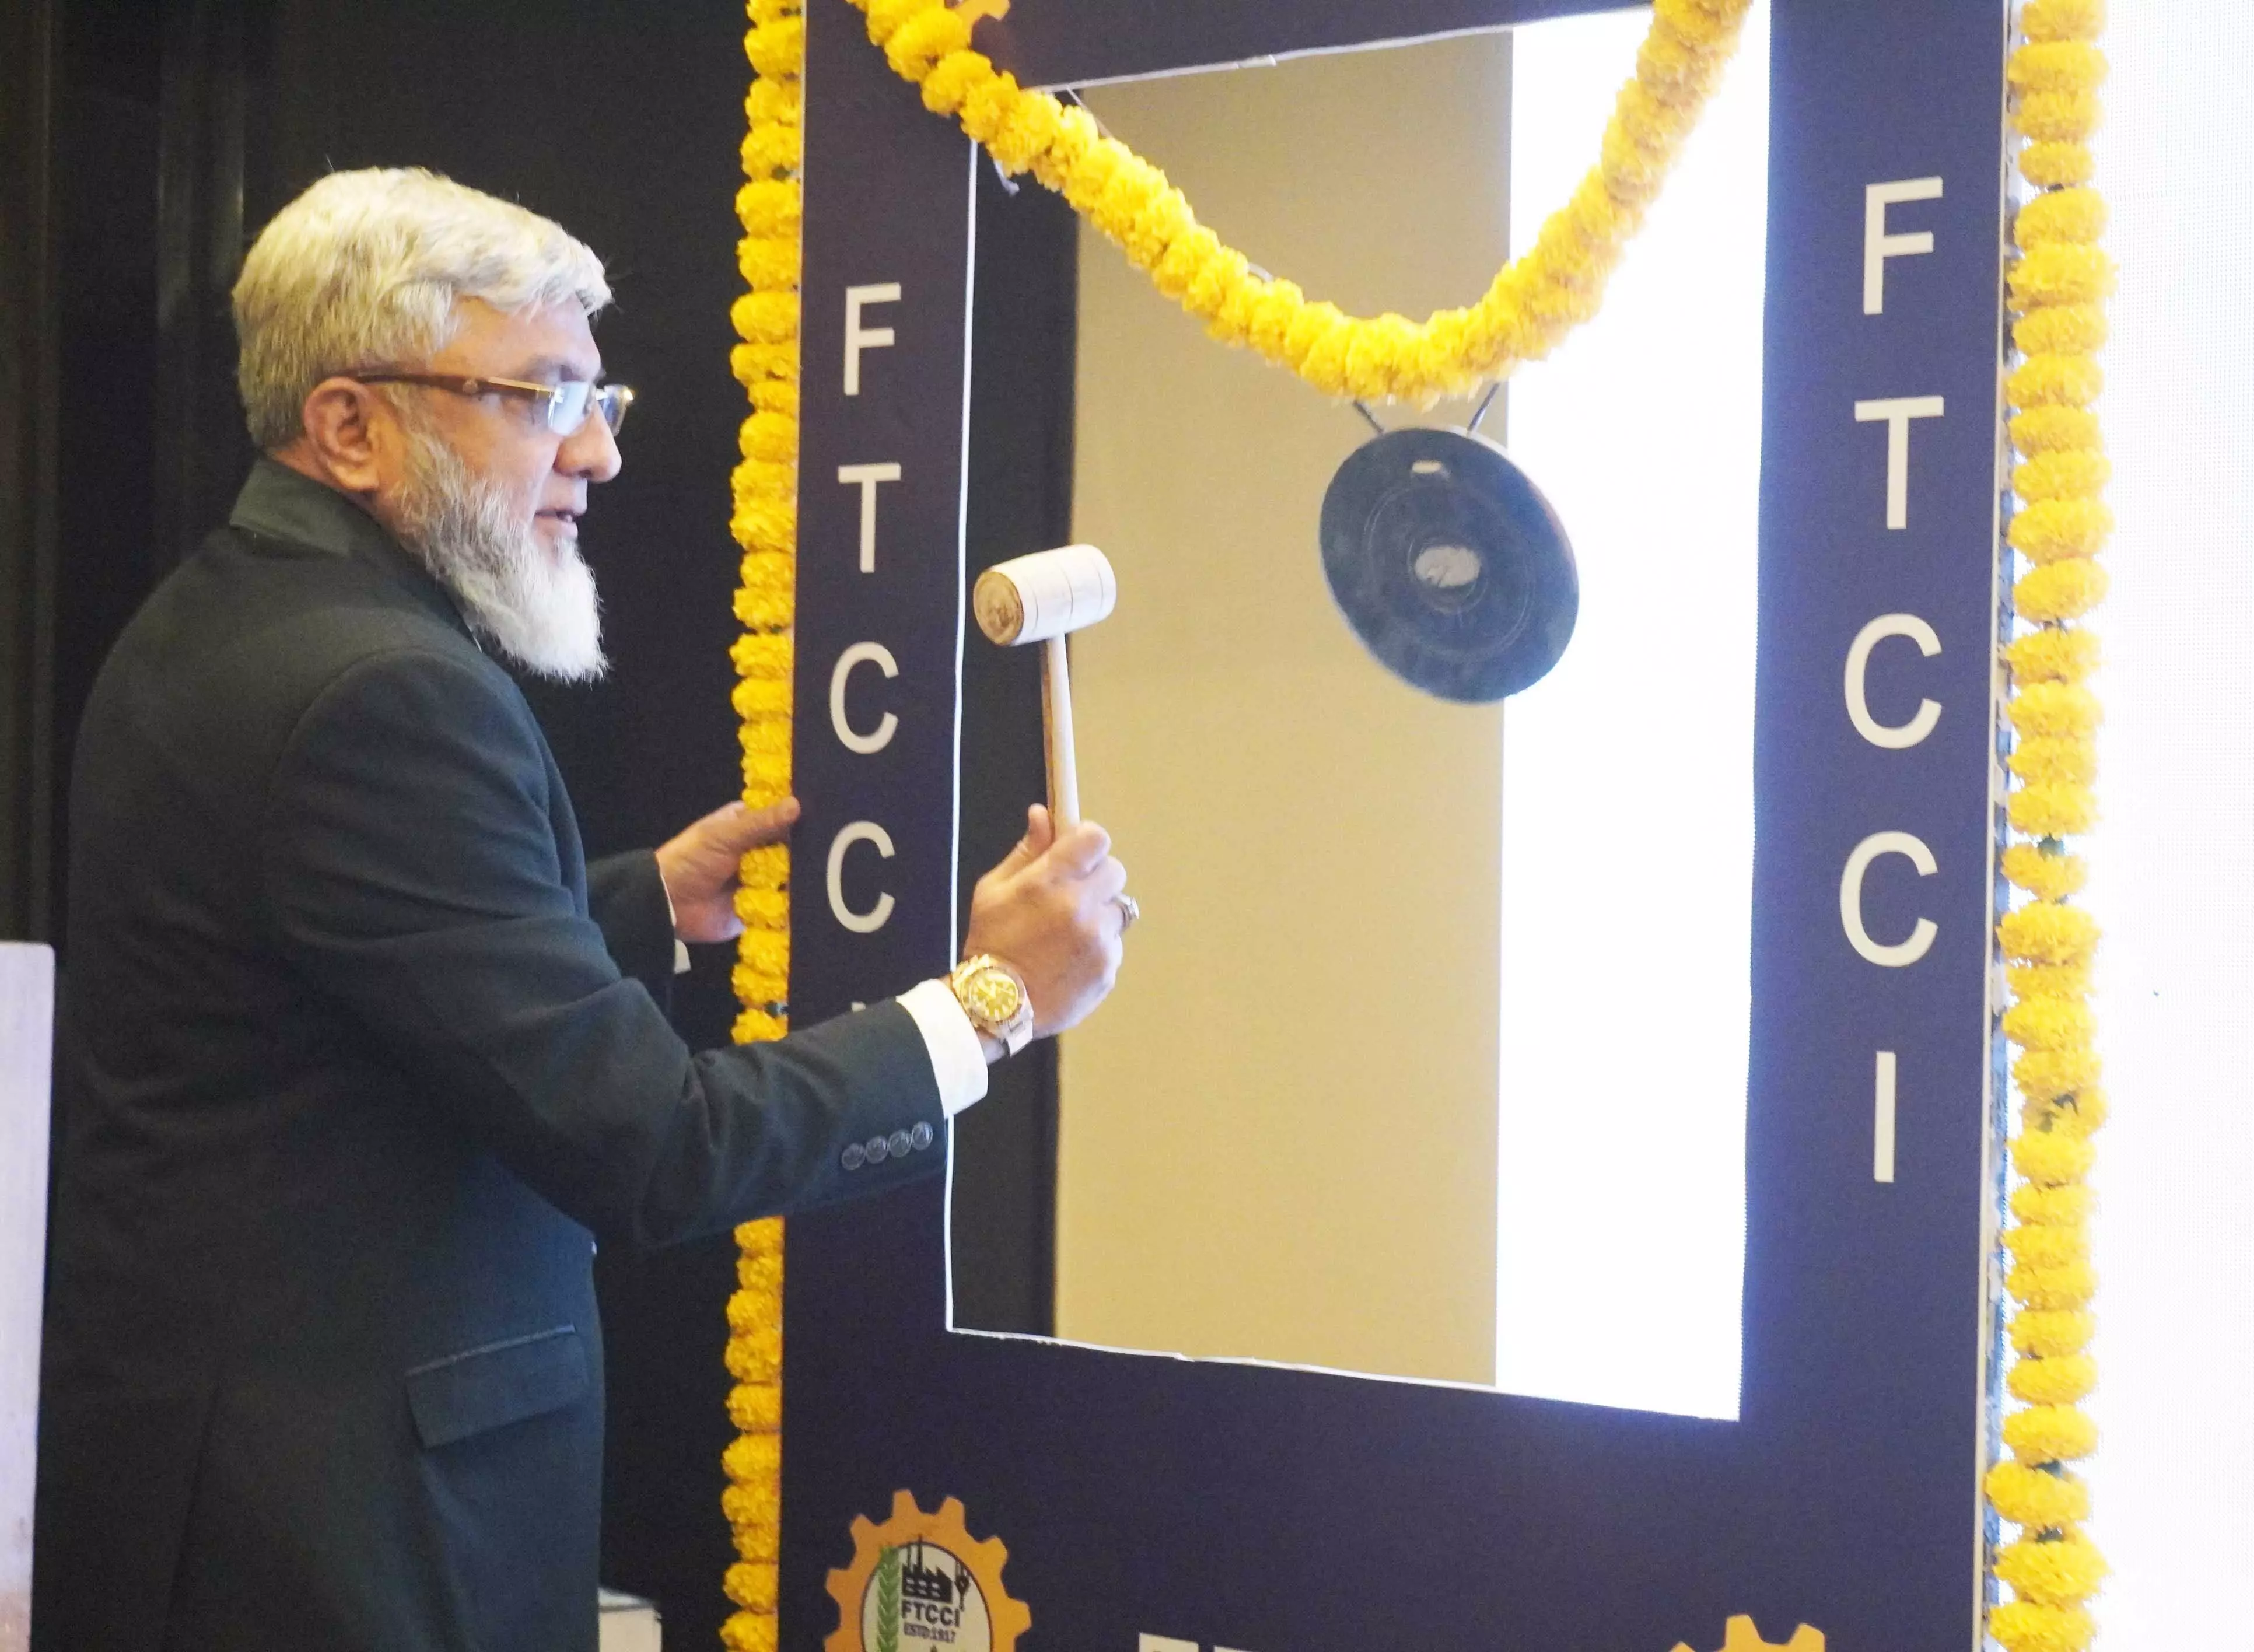 FTCCI organised a unique SME IPO conclave